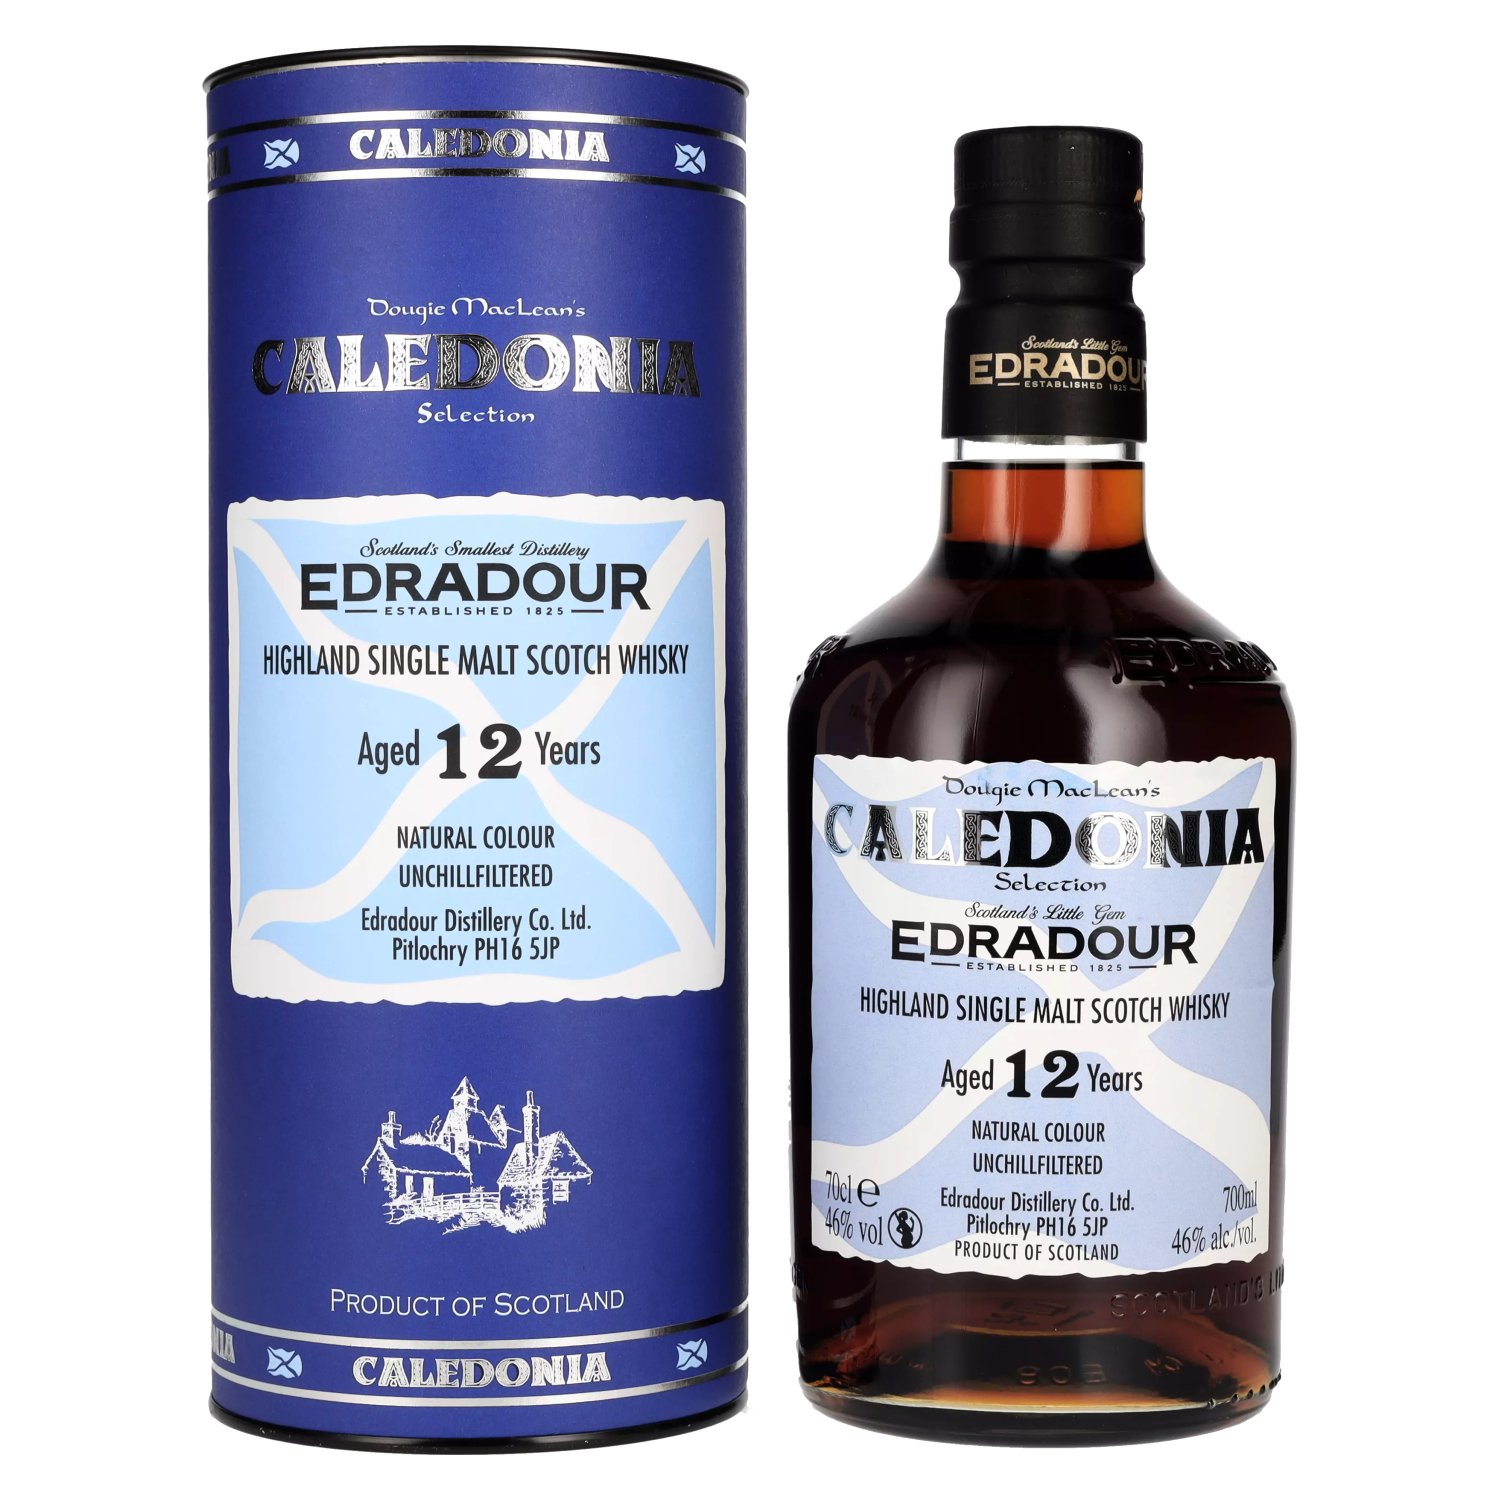 Edradour 0,7l in Vol. 12 Years Scotch Whisky Highland Single Old 46% CALEDONIA Geschenkbox Malt